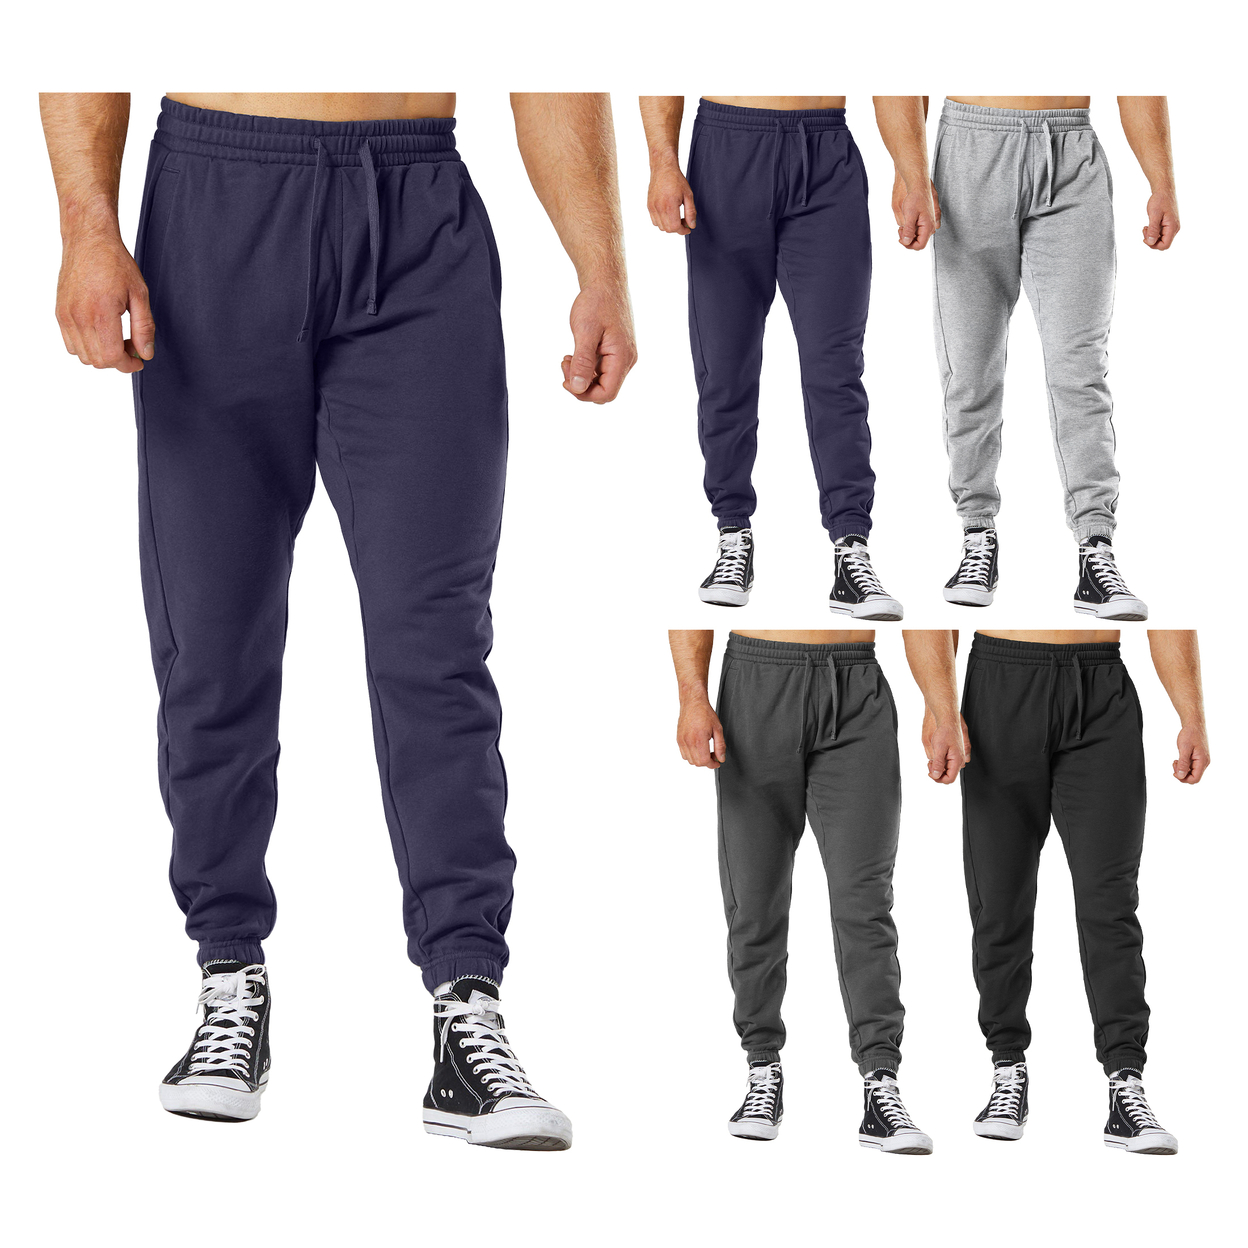 2-Pack: Men's Ultra-Soft Cozy Winter Warm Casual Fleece-Lined Sweatpants Jogger - Black & Charcoal, Medium